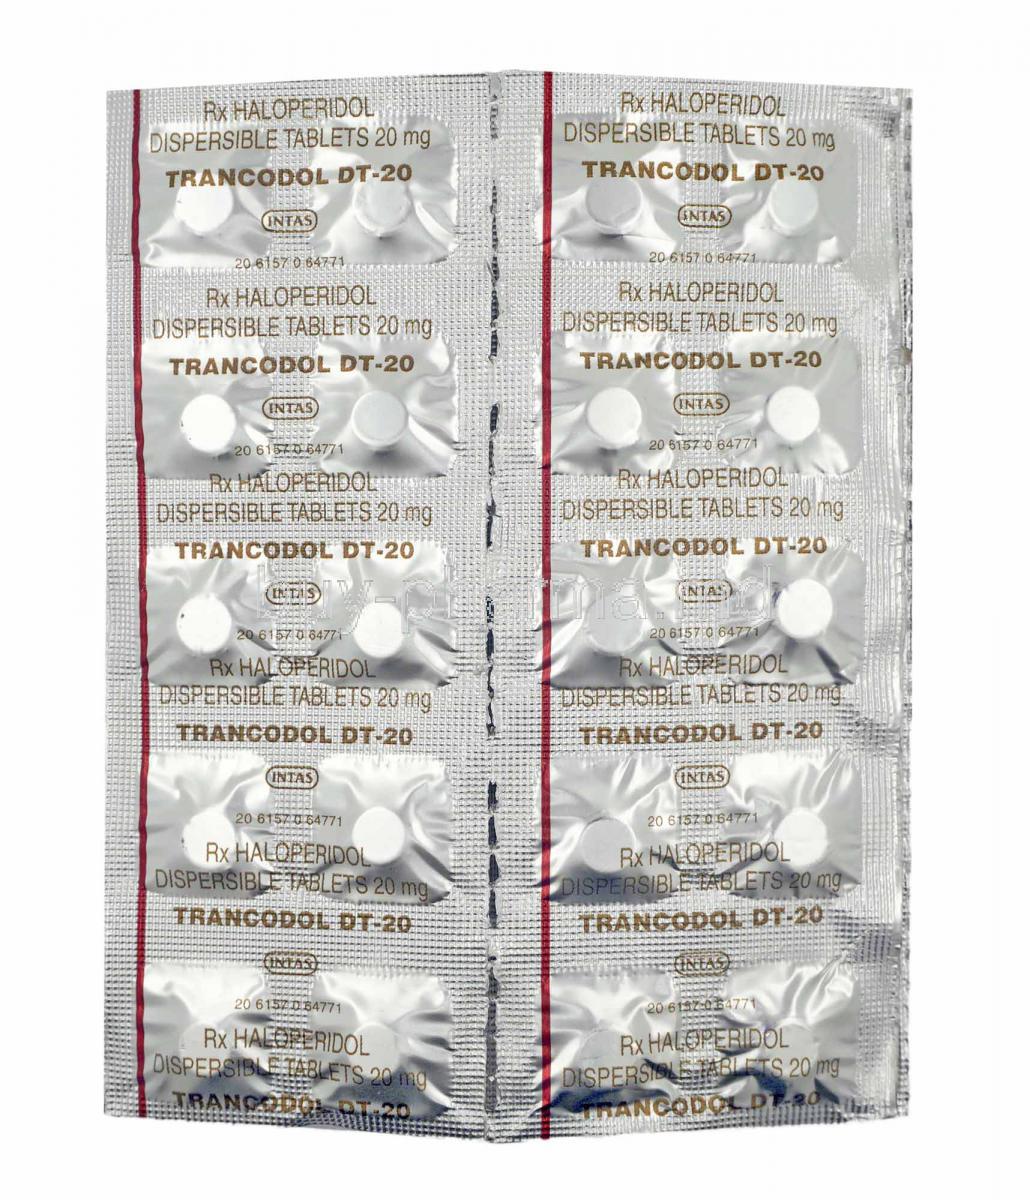 Trancodol DT, Haloperidol 5mg tablets